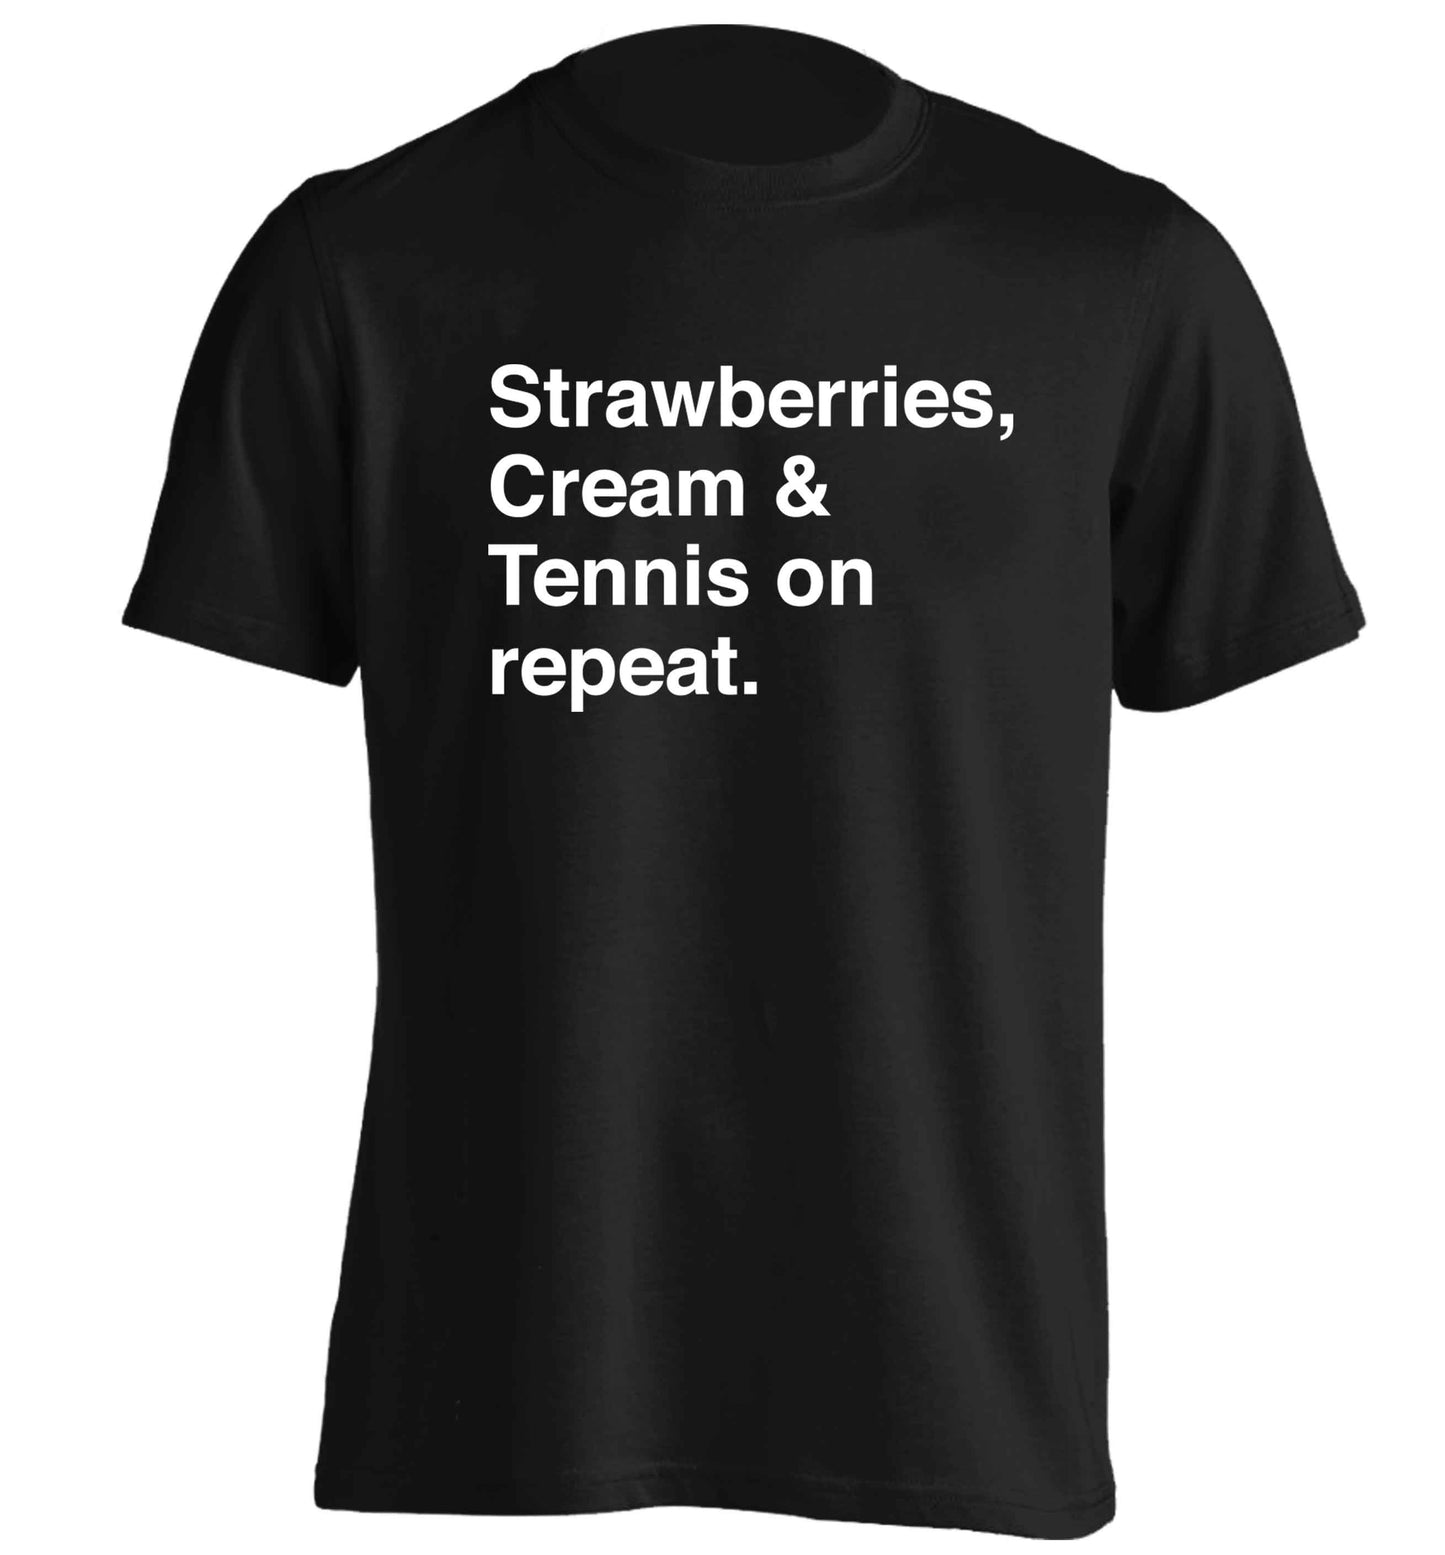 Strawberries, cream and tennis on repeat adults unisex black Tshirt 2XL